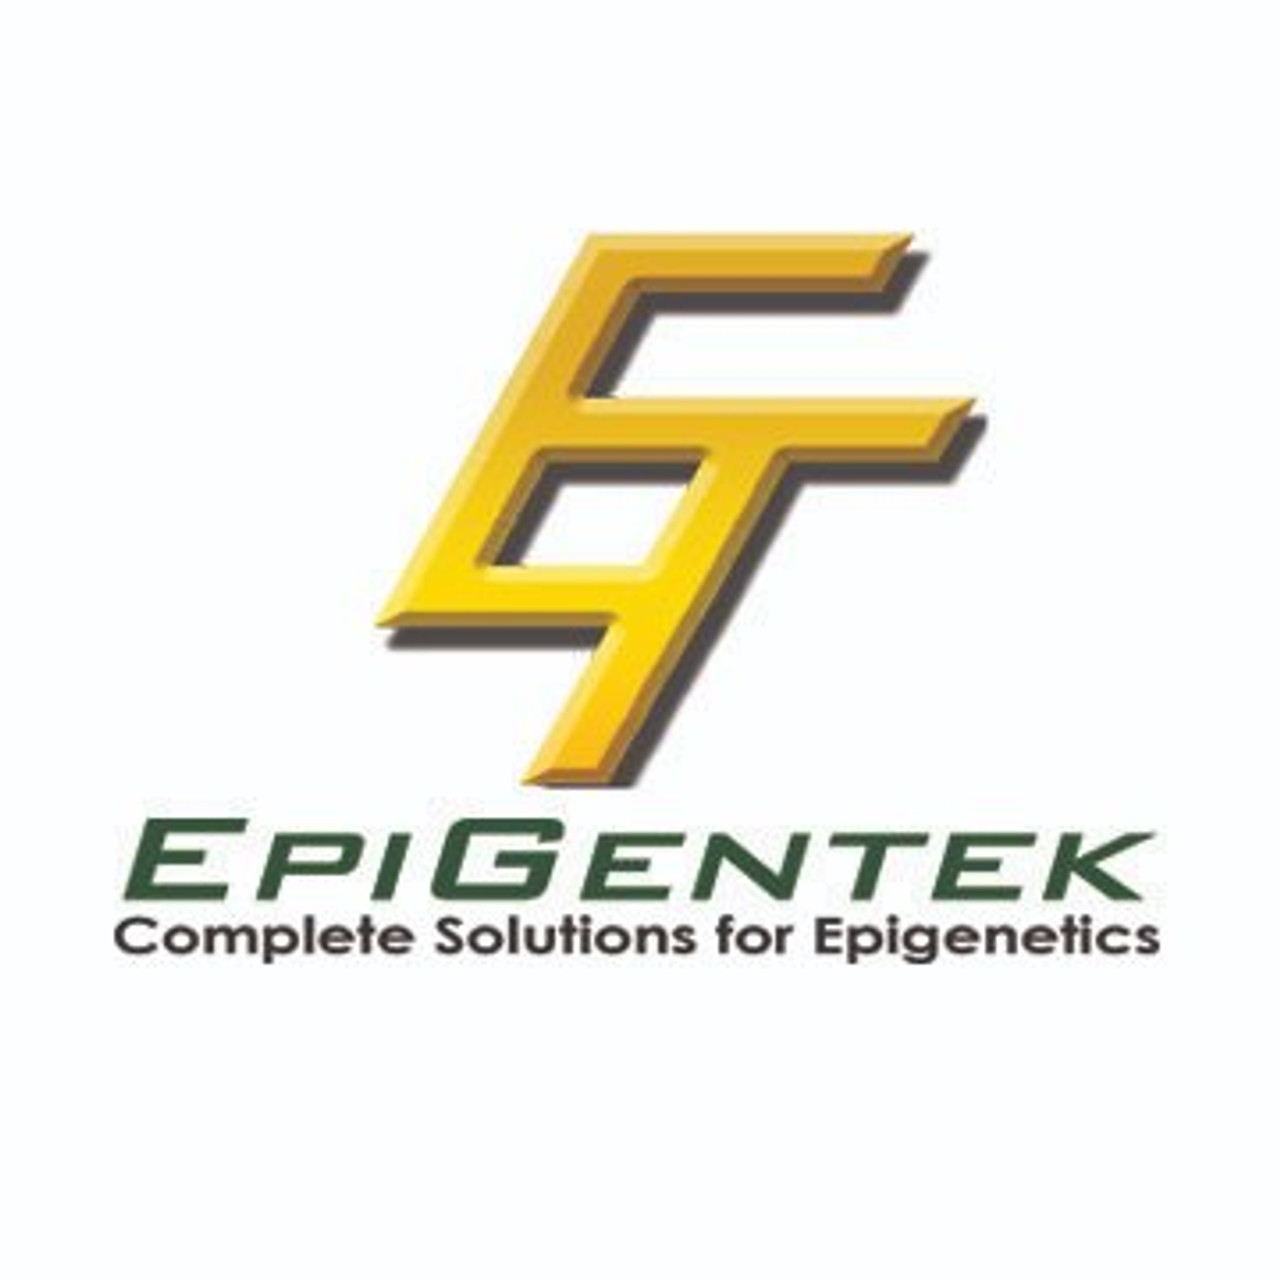 QuantiSir Specific Gene Knockdown Quantification Kit For Epigenetic Regulators - TAFII